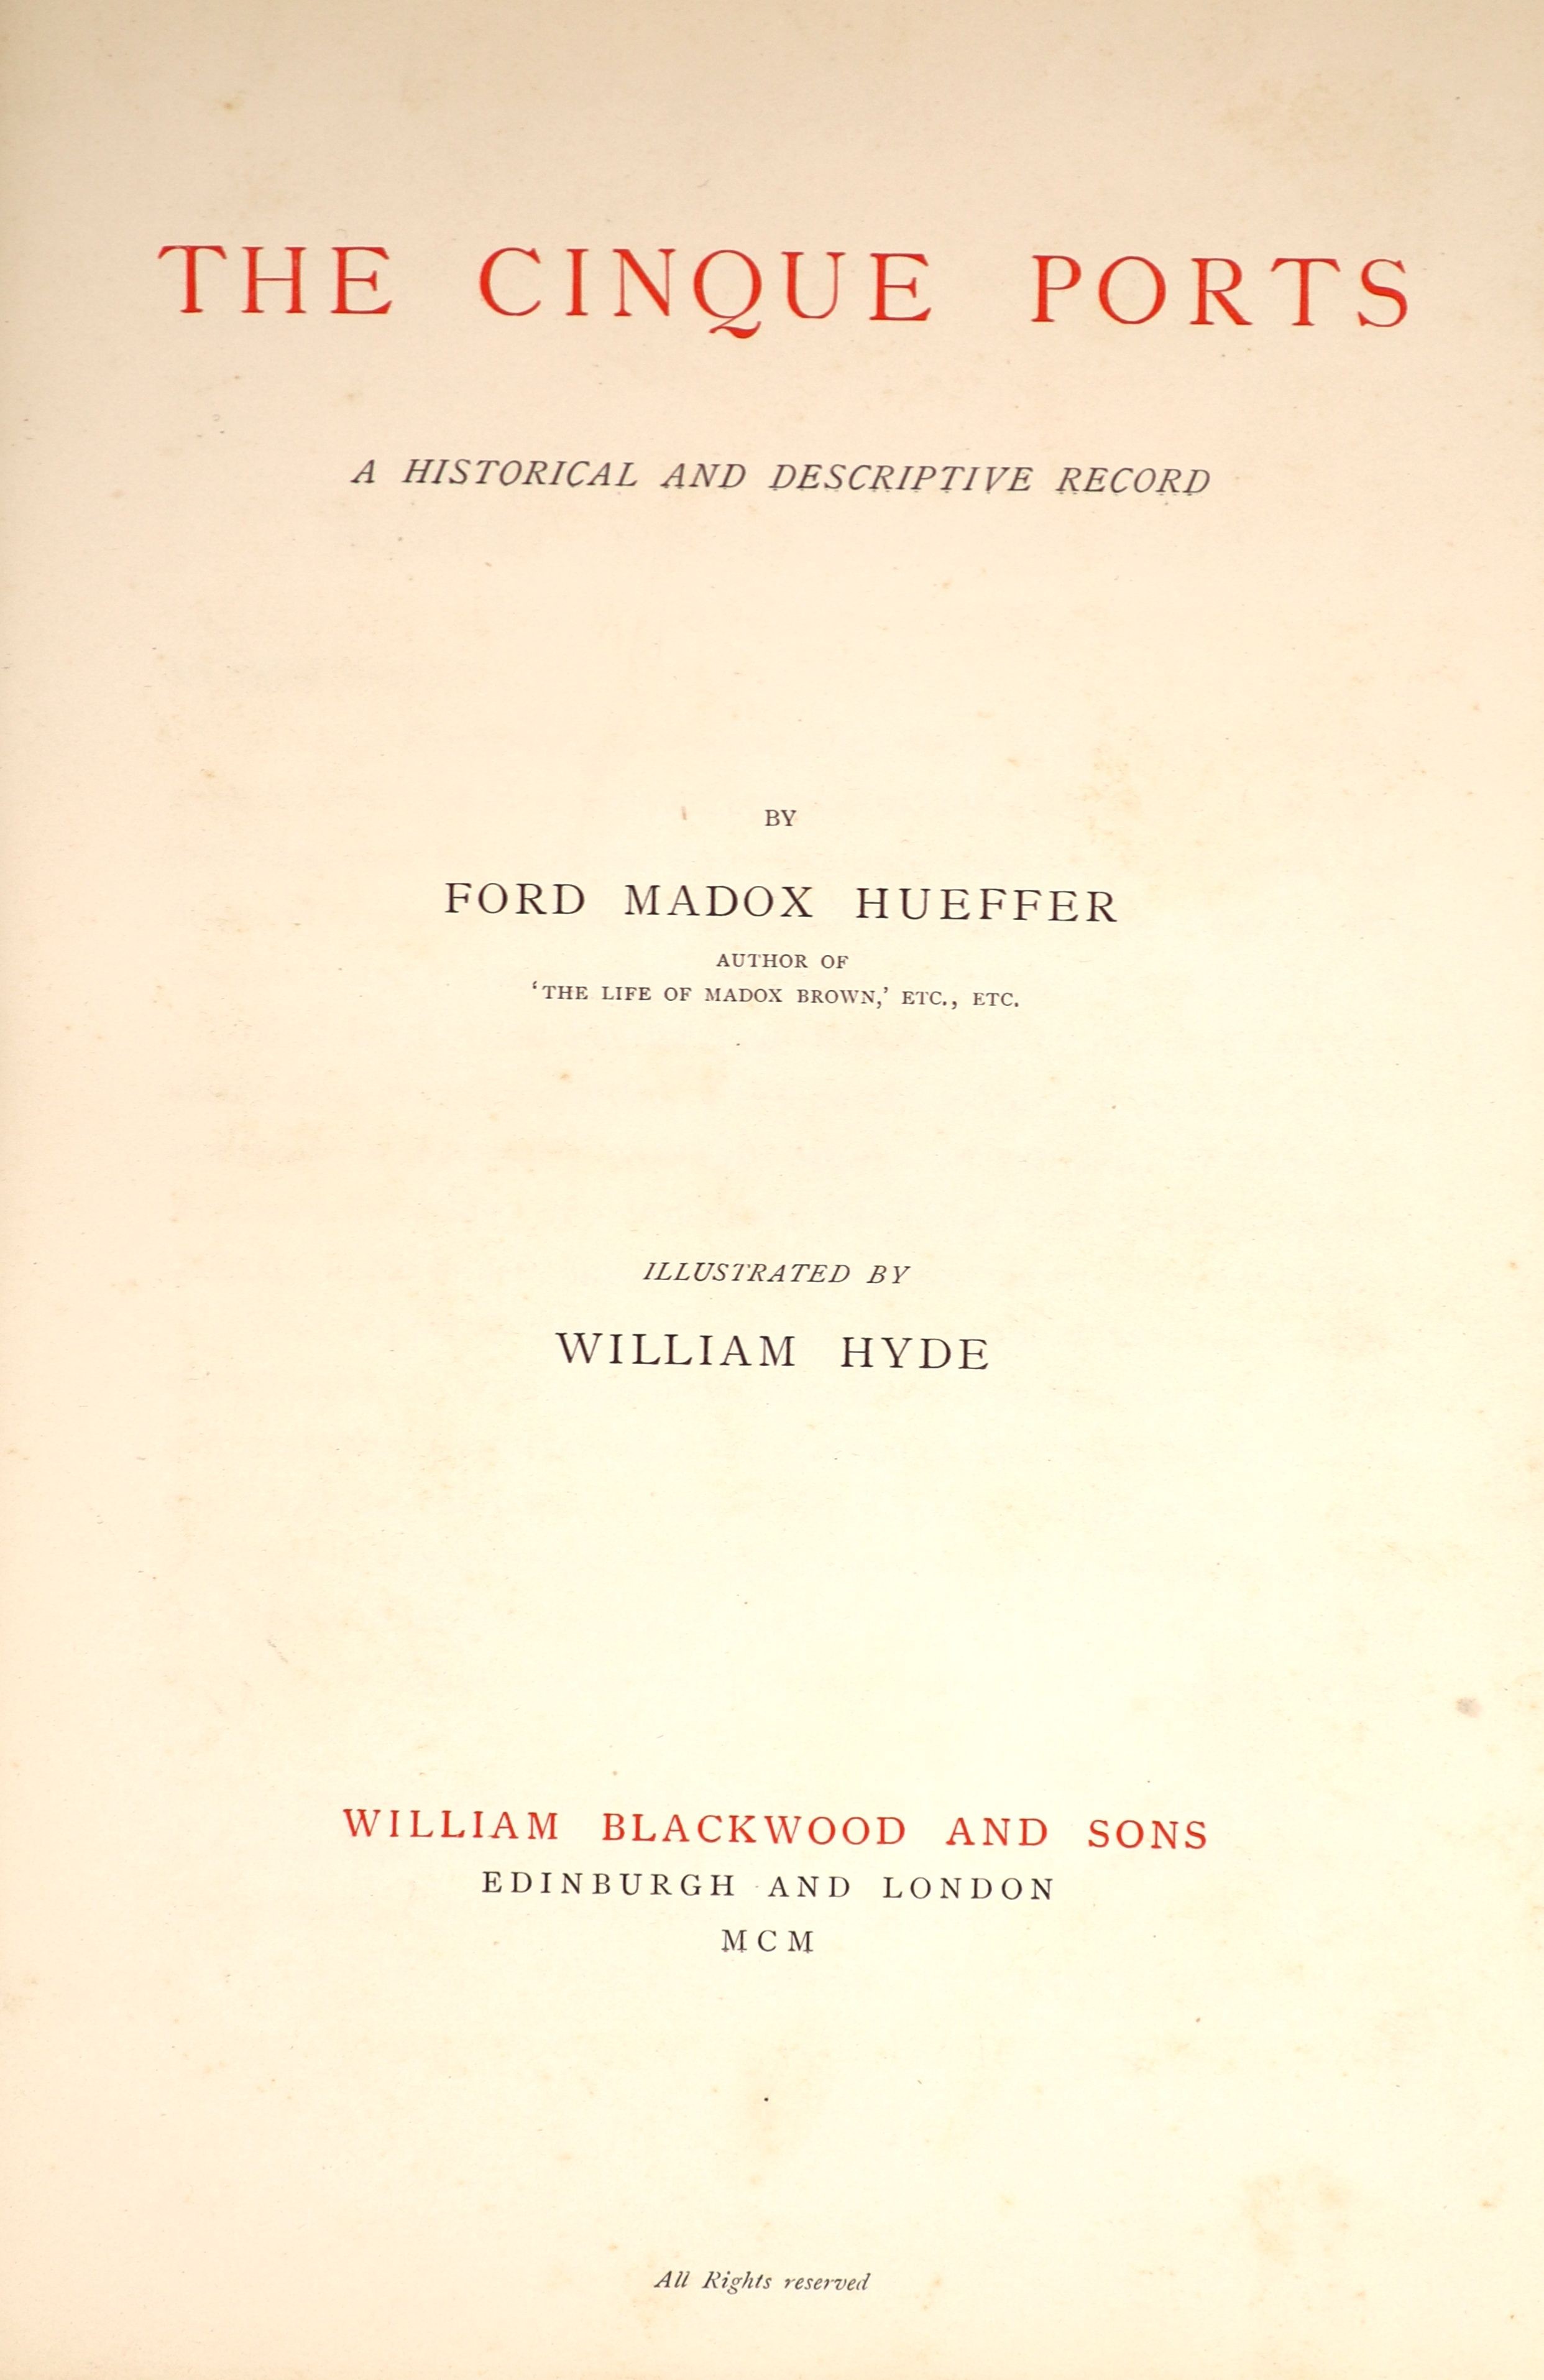 Heuffer, Ford Maddox - The Cinque Ports, 4to, light tan buckram, 13 plates by William Hyde, William Blackwood & Sons, Edinburgh, 1900